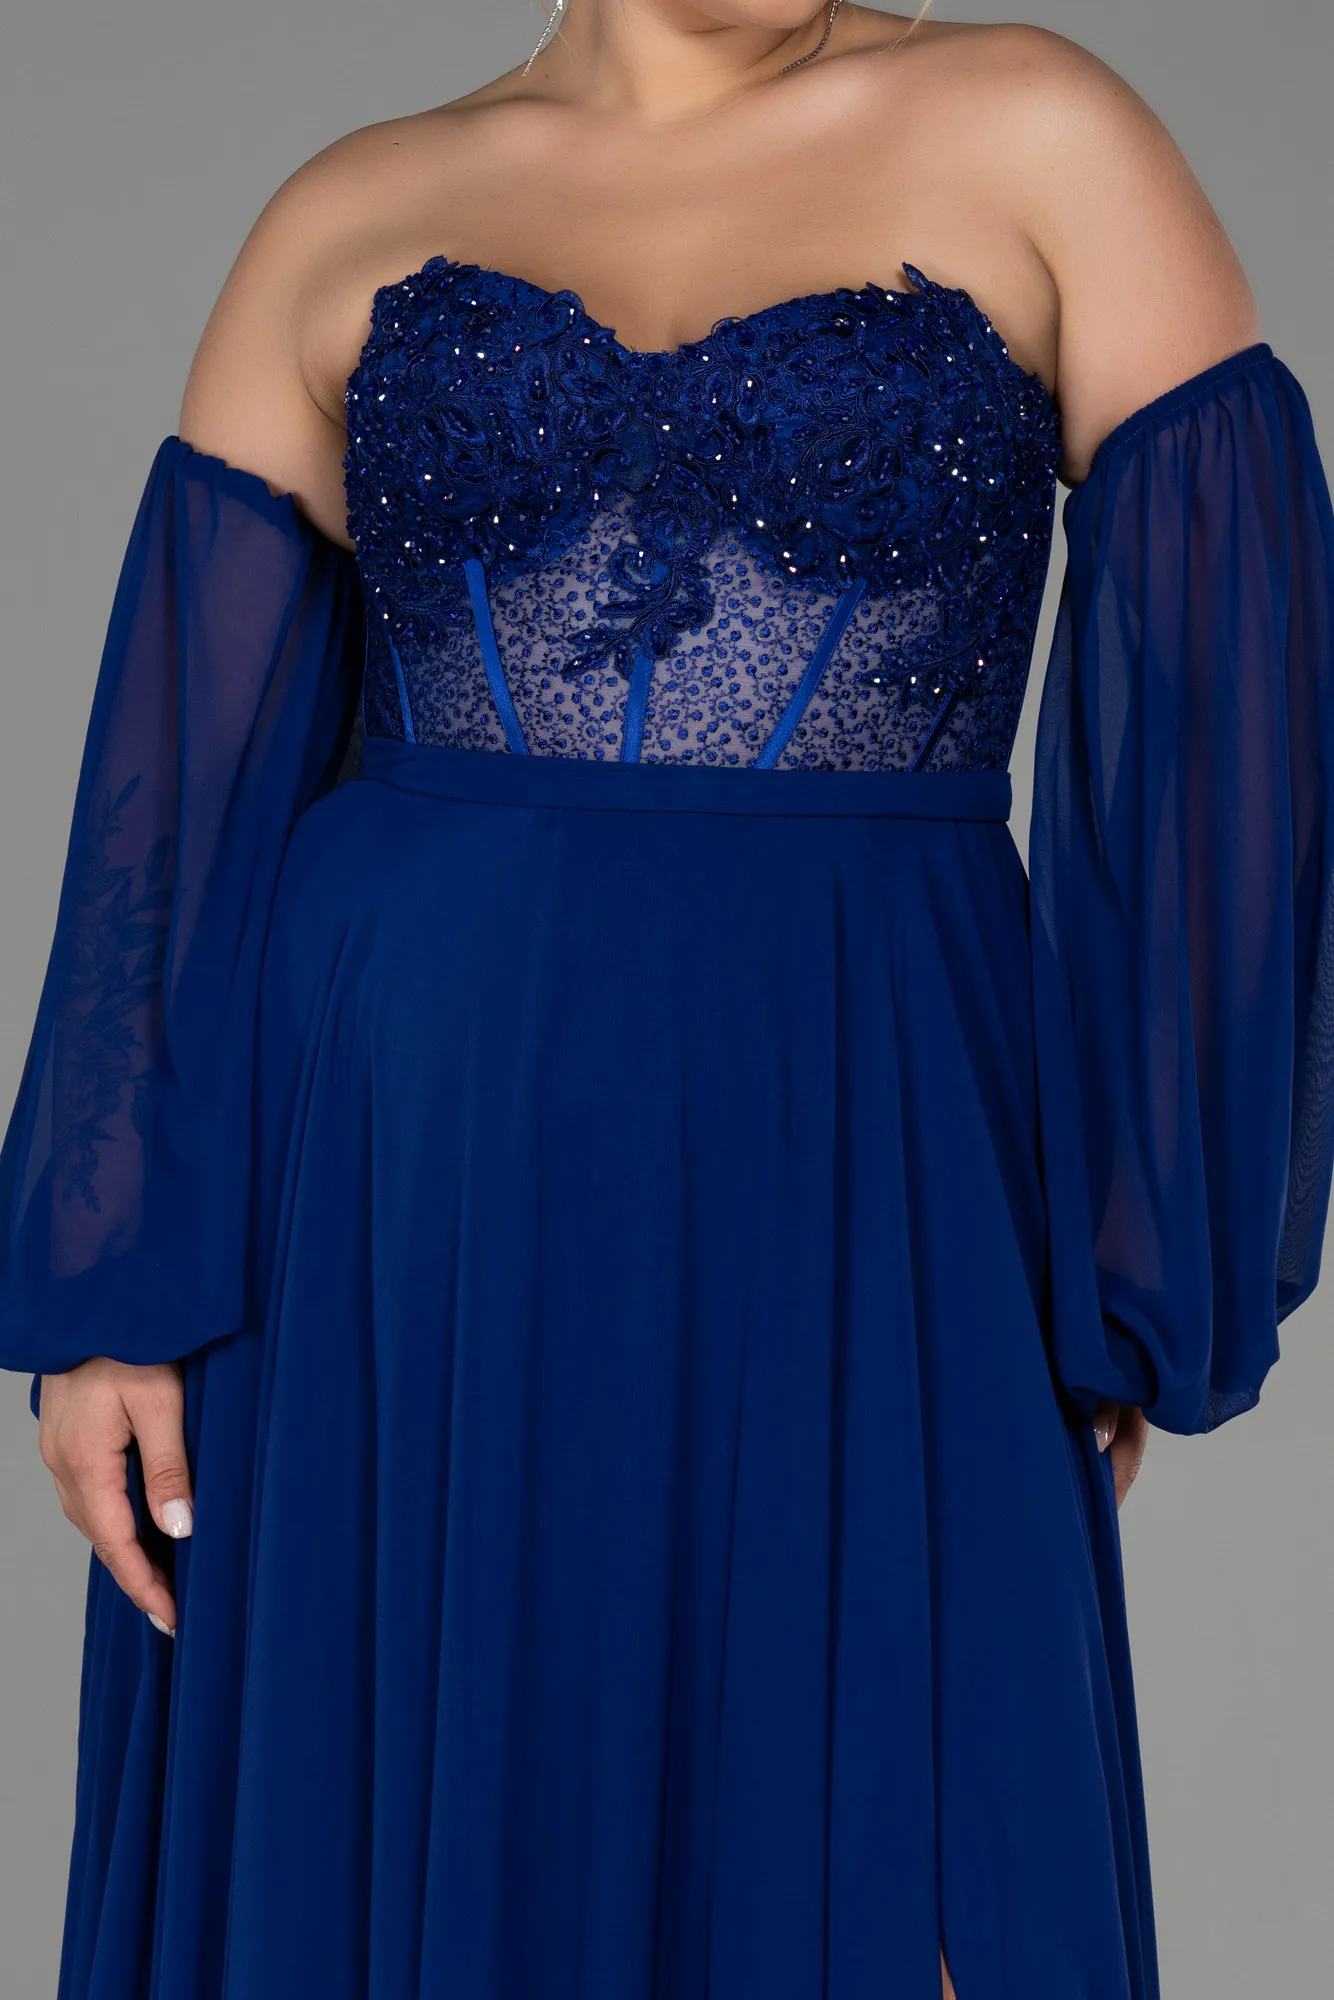 Sax Blue-Long Chiffon Plus Size Evening Dress ABU3451